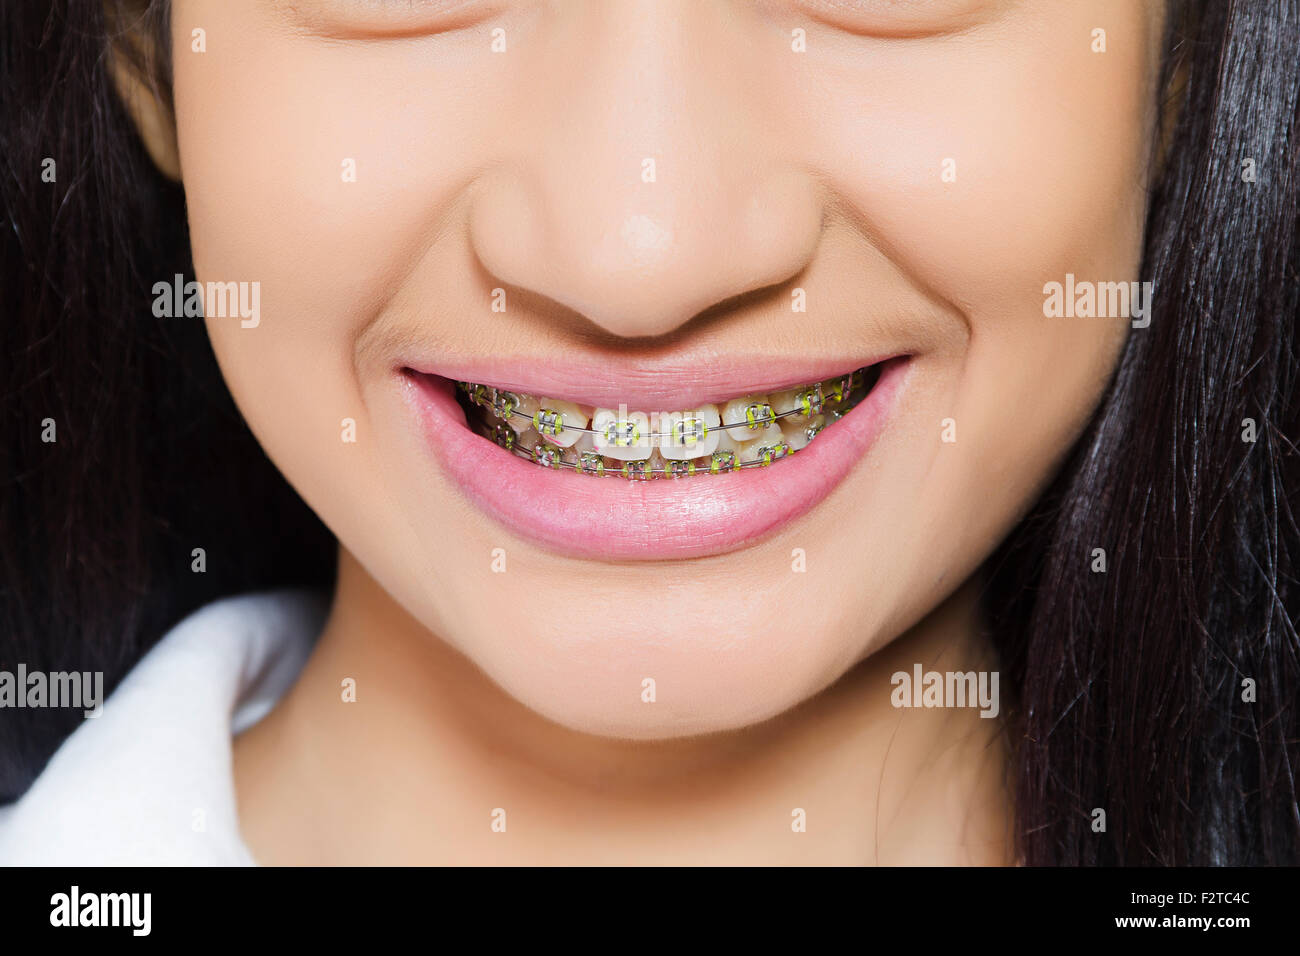 1 indian Teenager Girl Teeth Showing Stock Photo